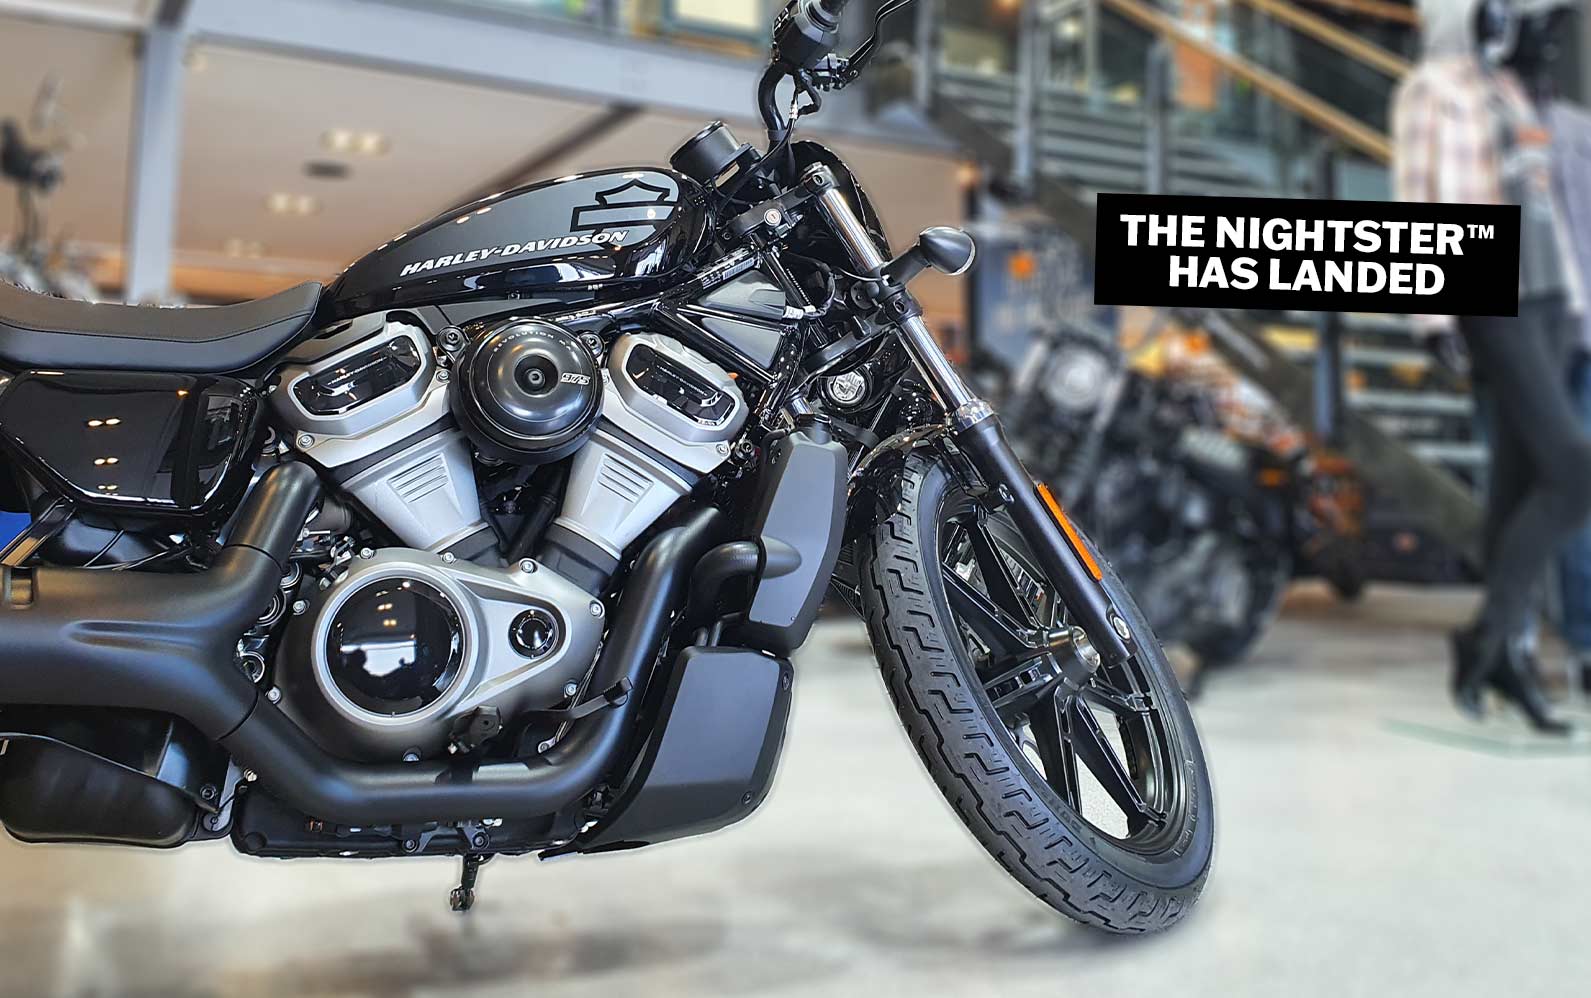 Photo of Nightster in Maidstone Harley-Davidson showroom